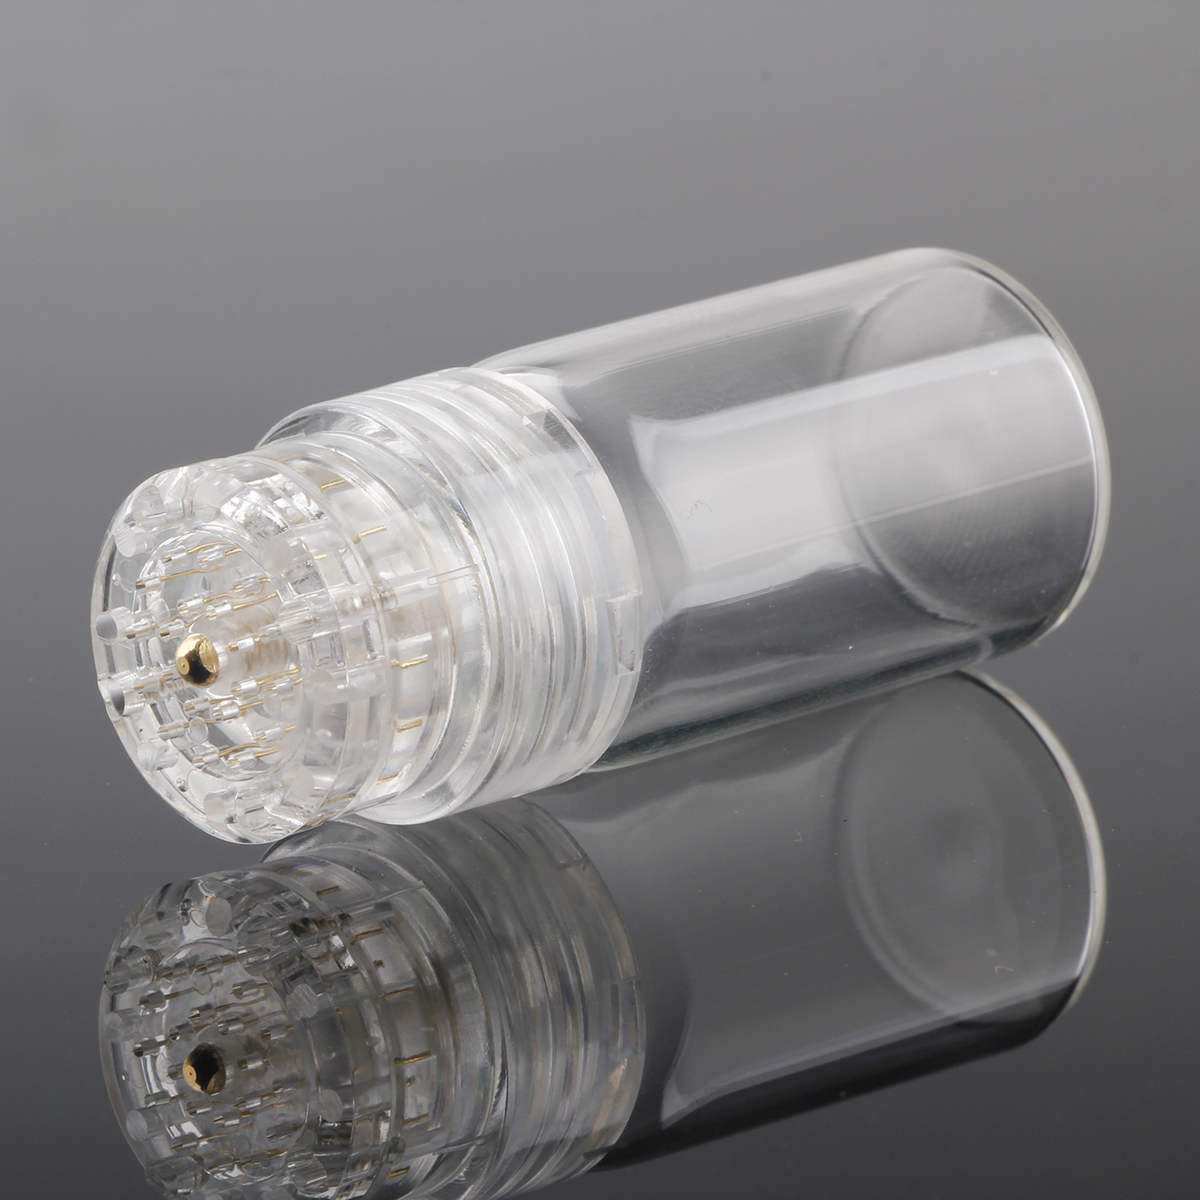 Hydra-20-Micro-Needle-Titanium-Applicator-Bottle-Anti-aging-Skin-Care-Reusable-1175219